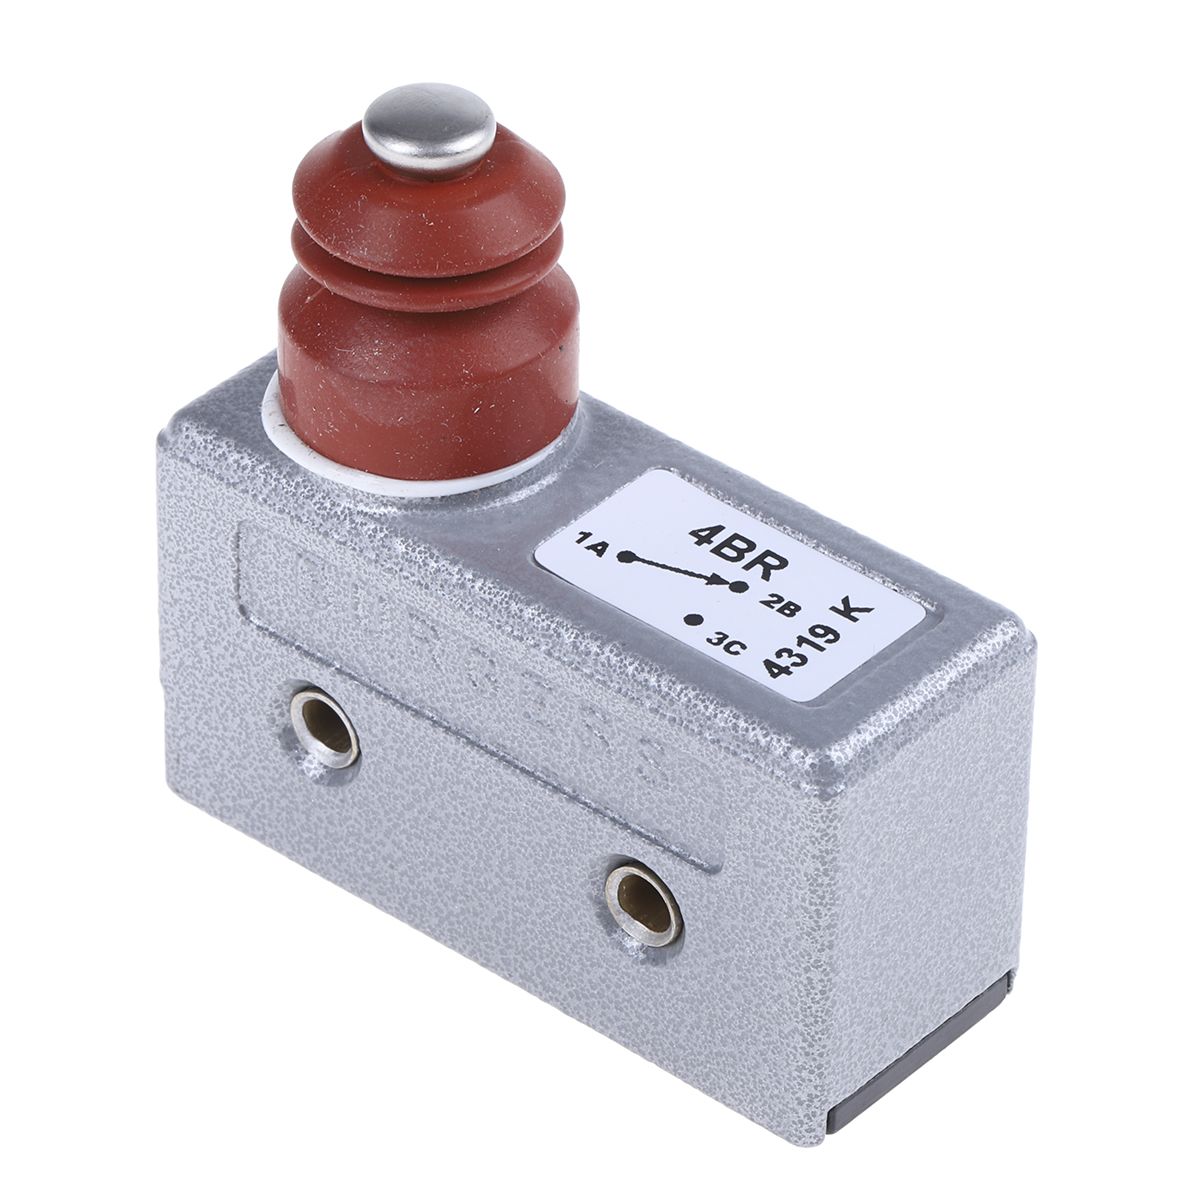 Saia-Burgess Plunger Micro Switch, Screw Terminal, 15 A @ 250 V ac, SP-NO/NC, IP54